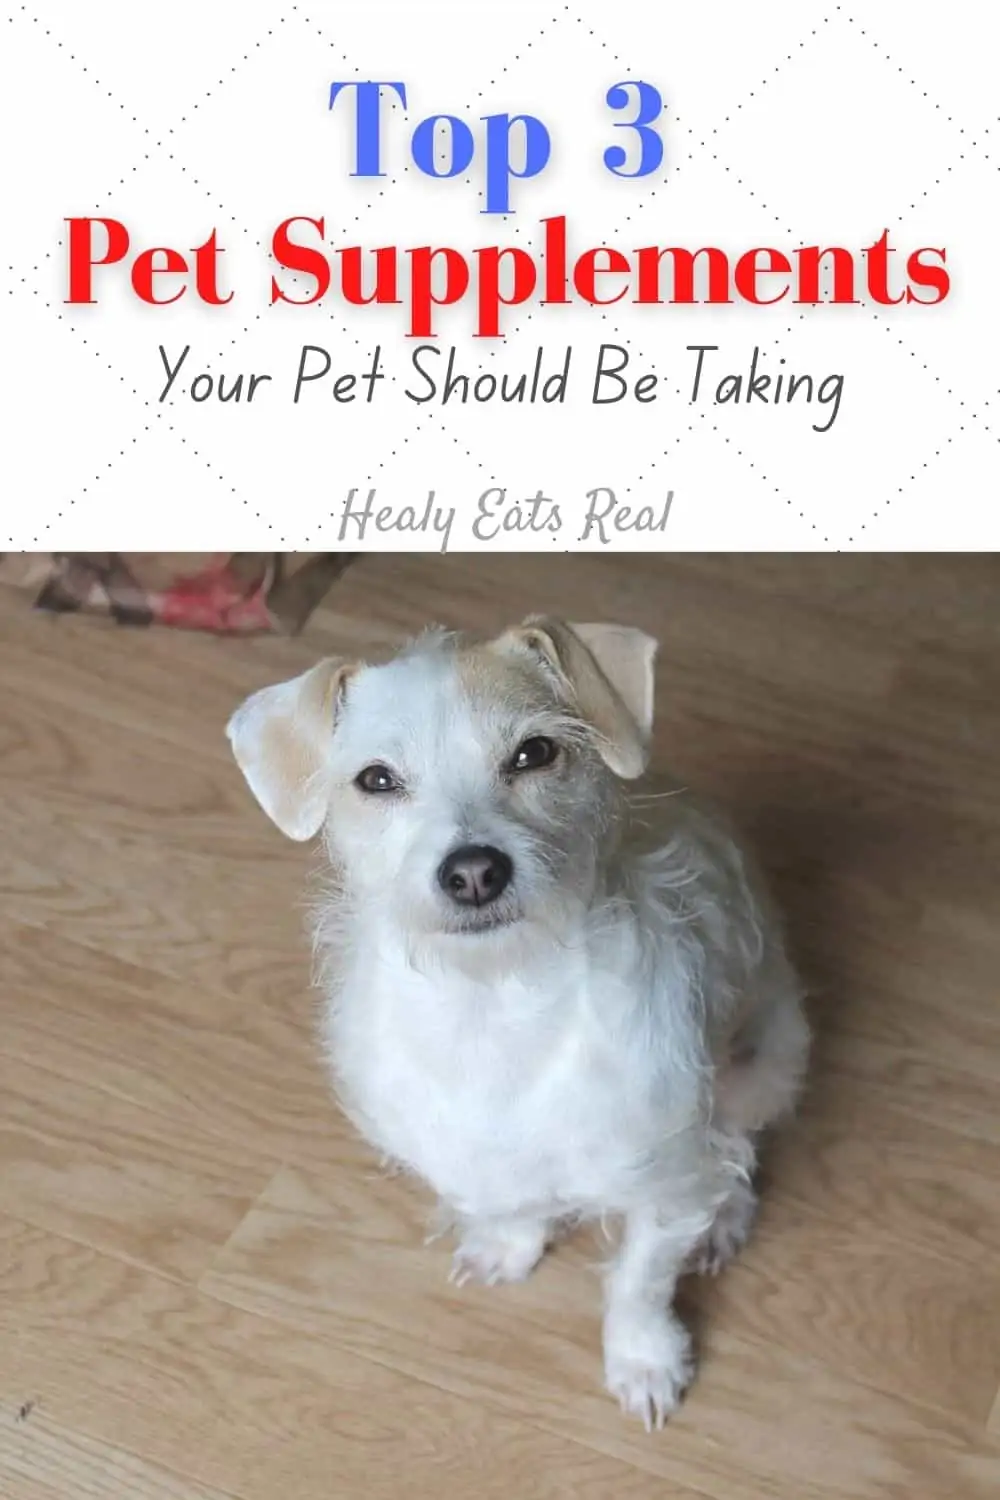 Top 3 Pet Supplements Your Pet Should Be Taking